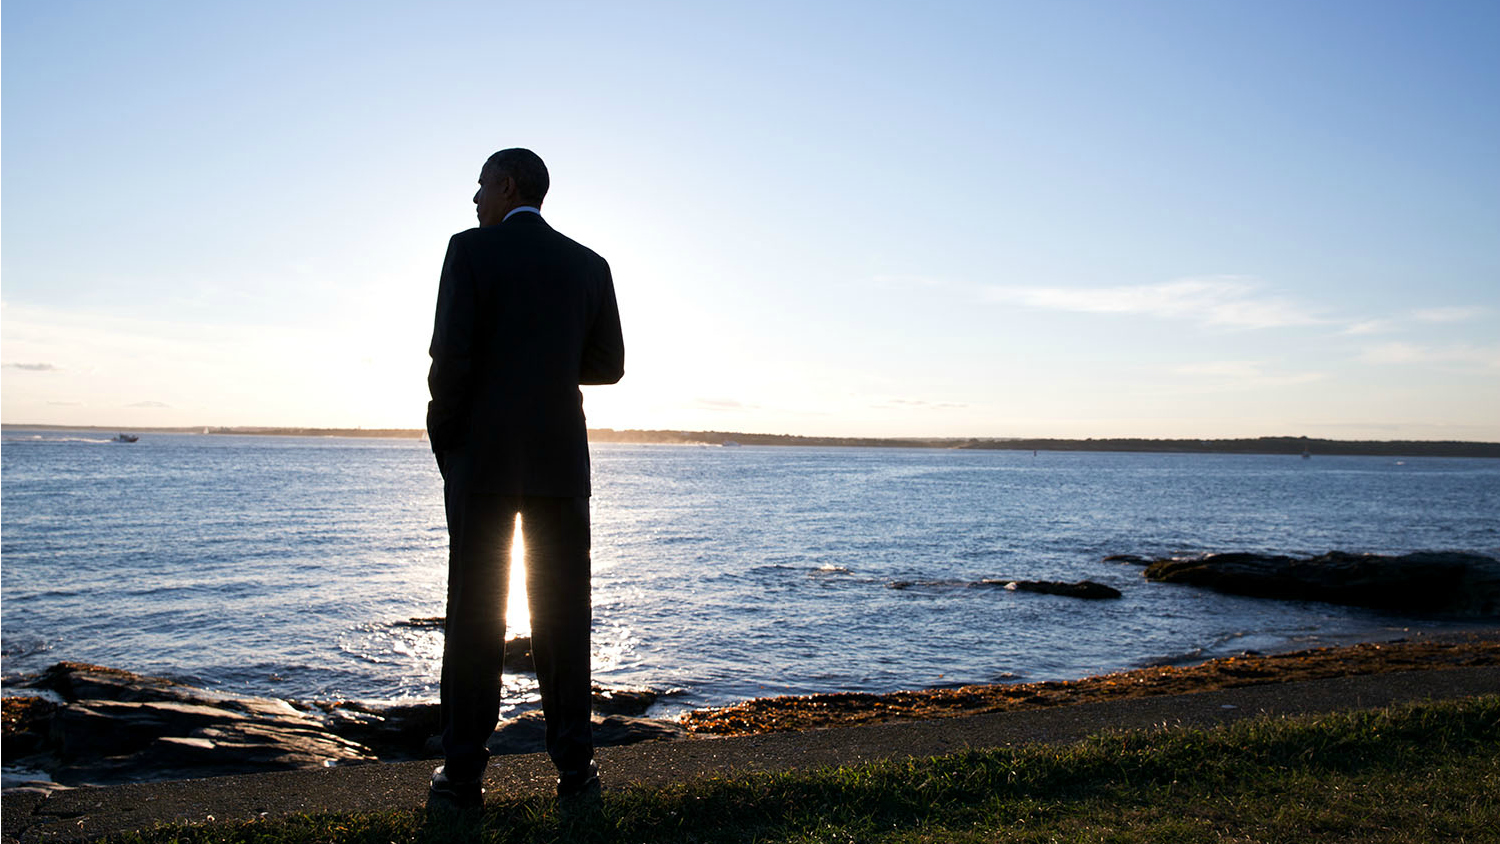 Obama on coastline